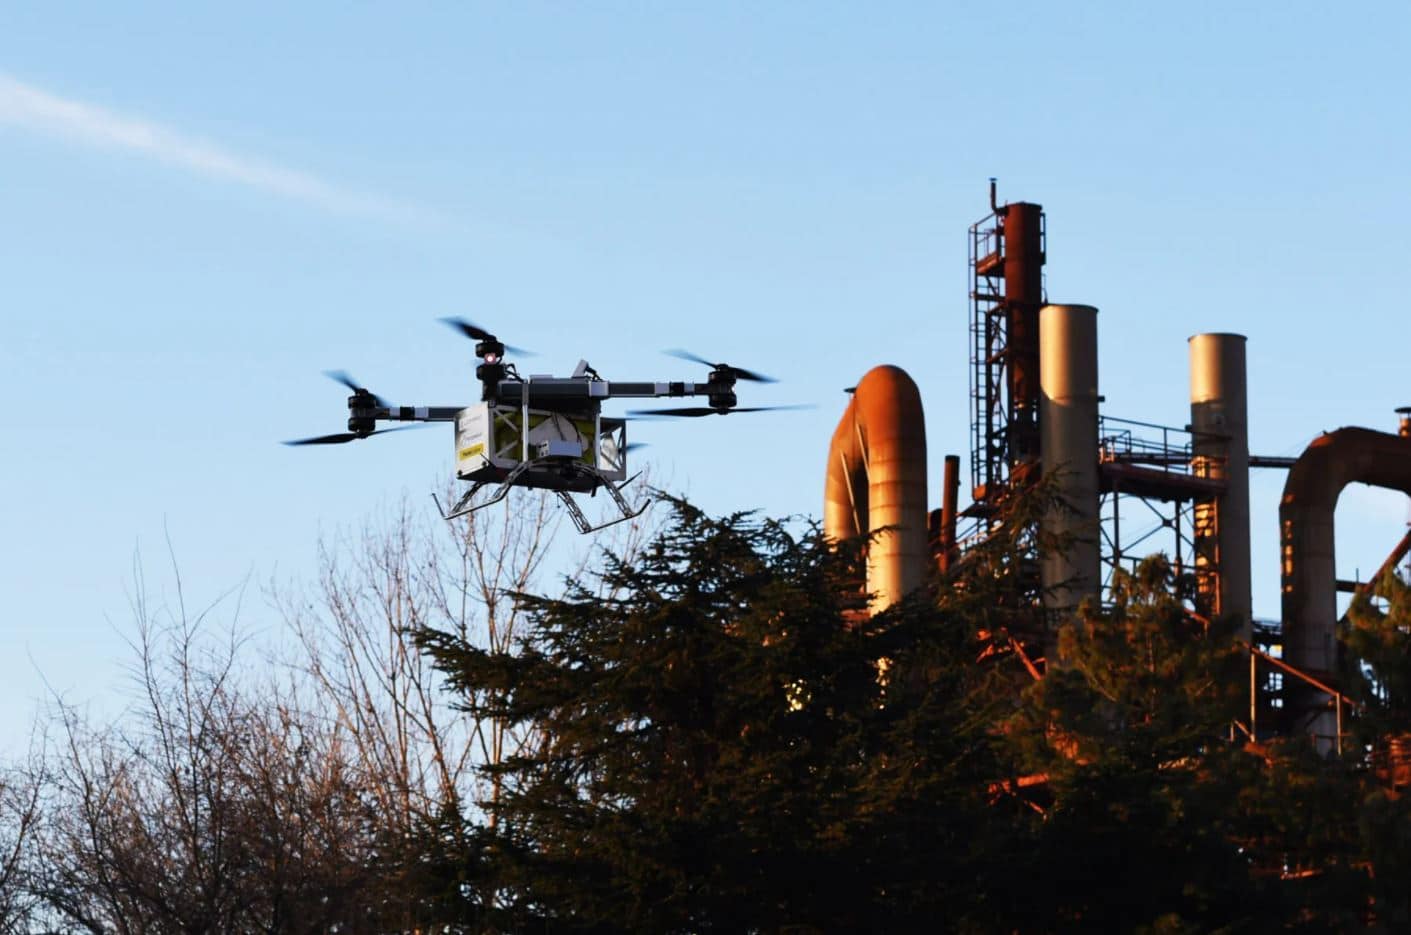 Consegne con droni a Torino Credits: FlyingBasket